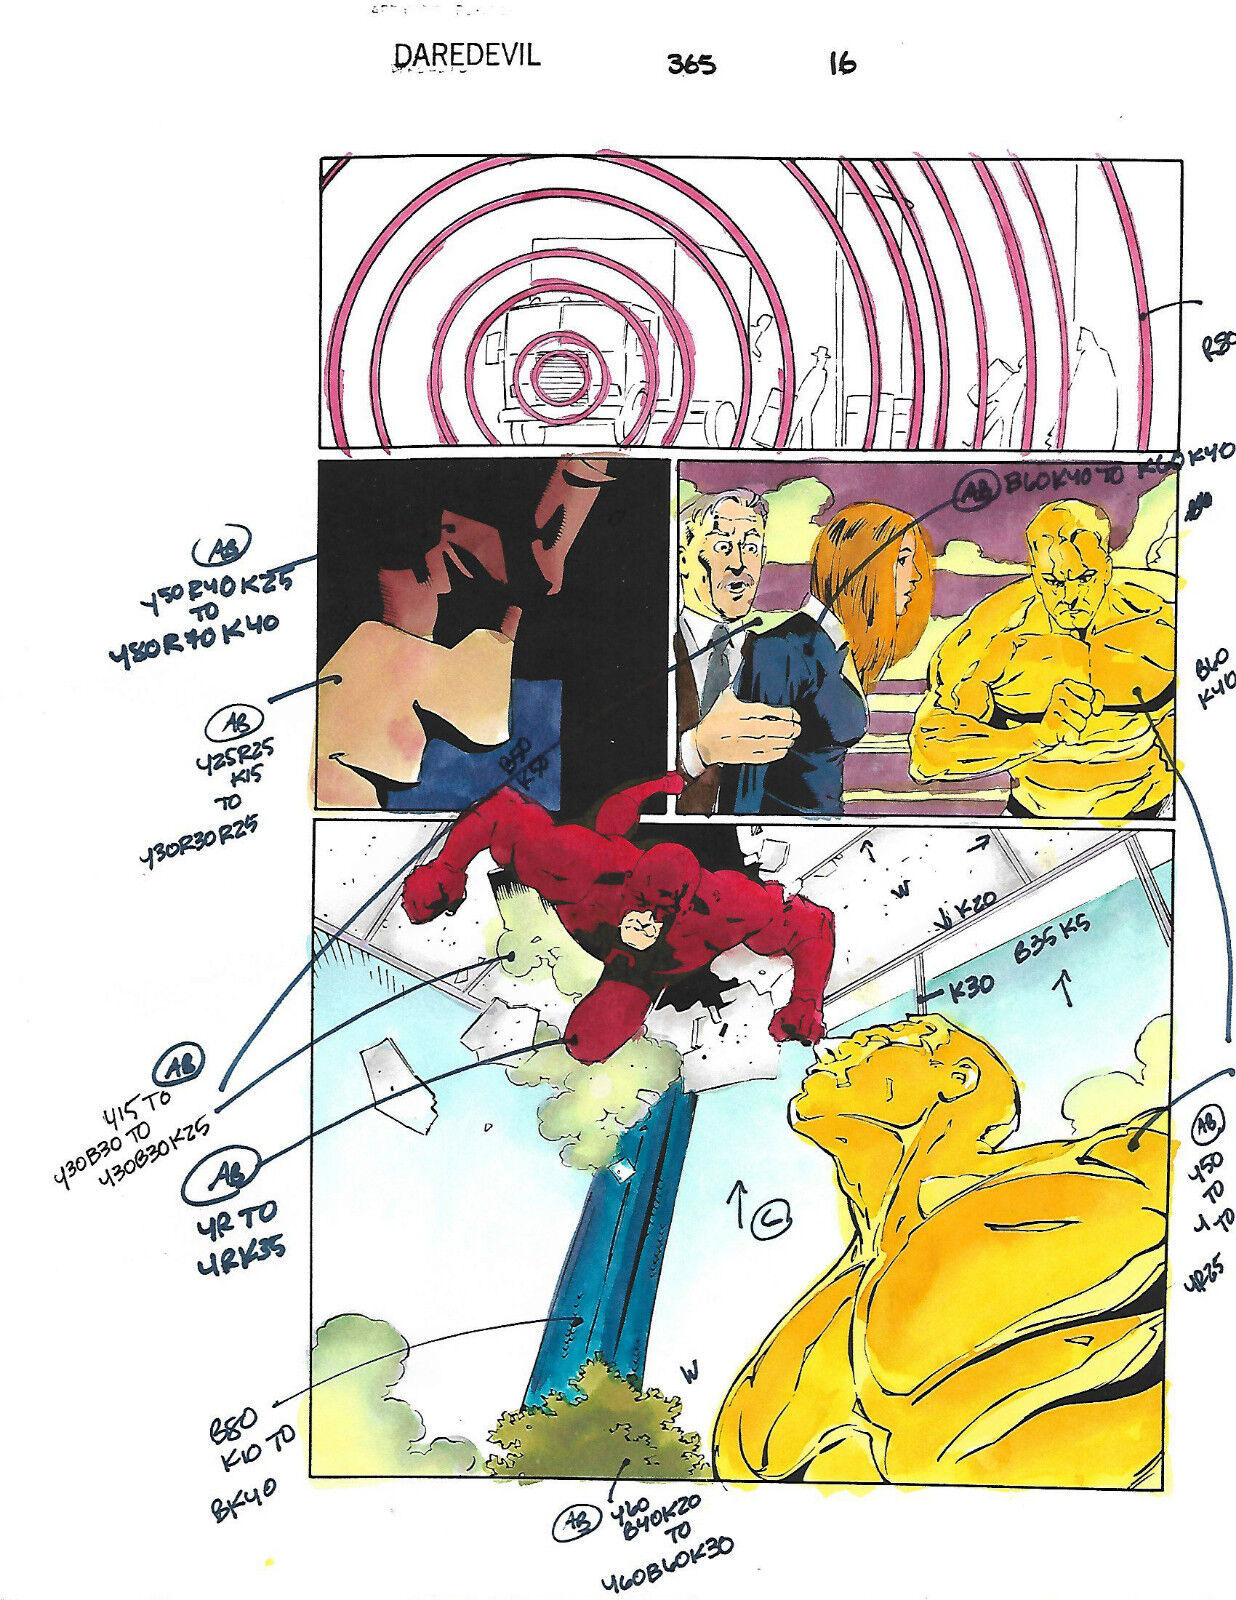 Original 1997 Daredevil Color Guide Art Page: DD 365 Marvel Comics Artwork, 90's - $68.59